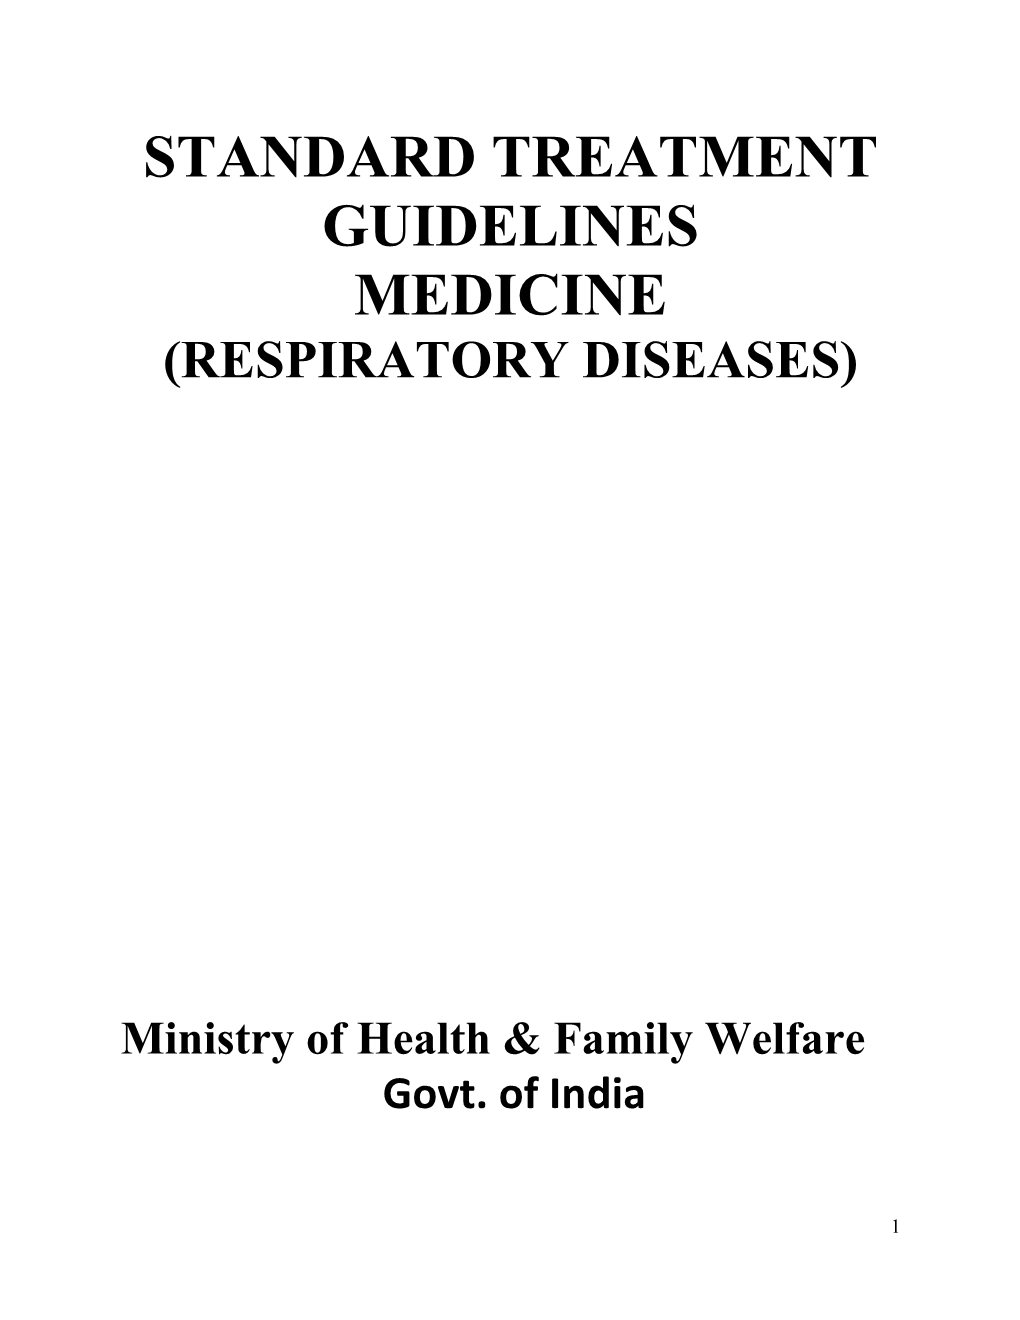 Standard Treatment Guidelines Medicine (Respiratory Diseases)